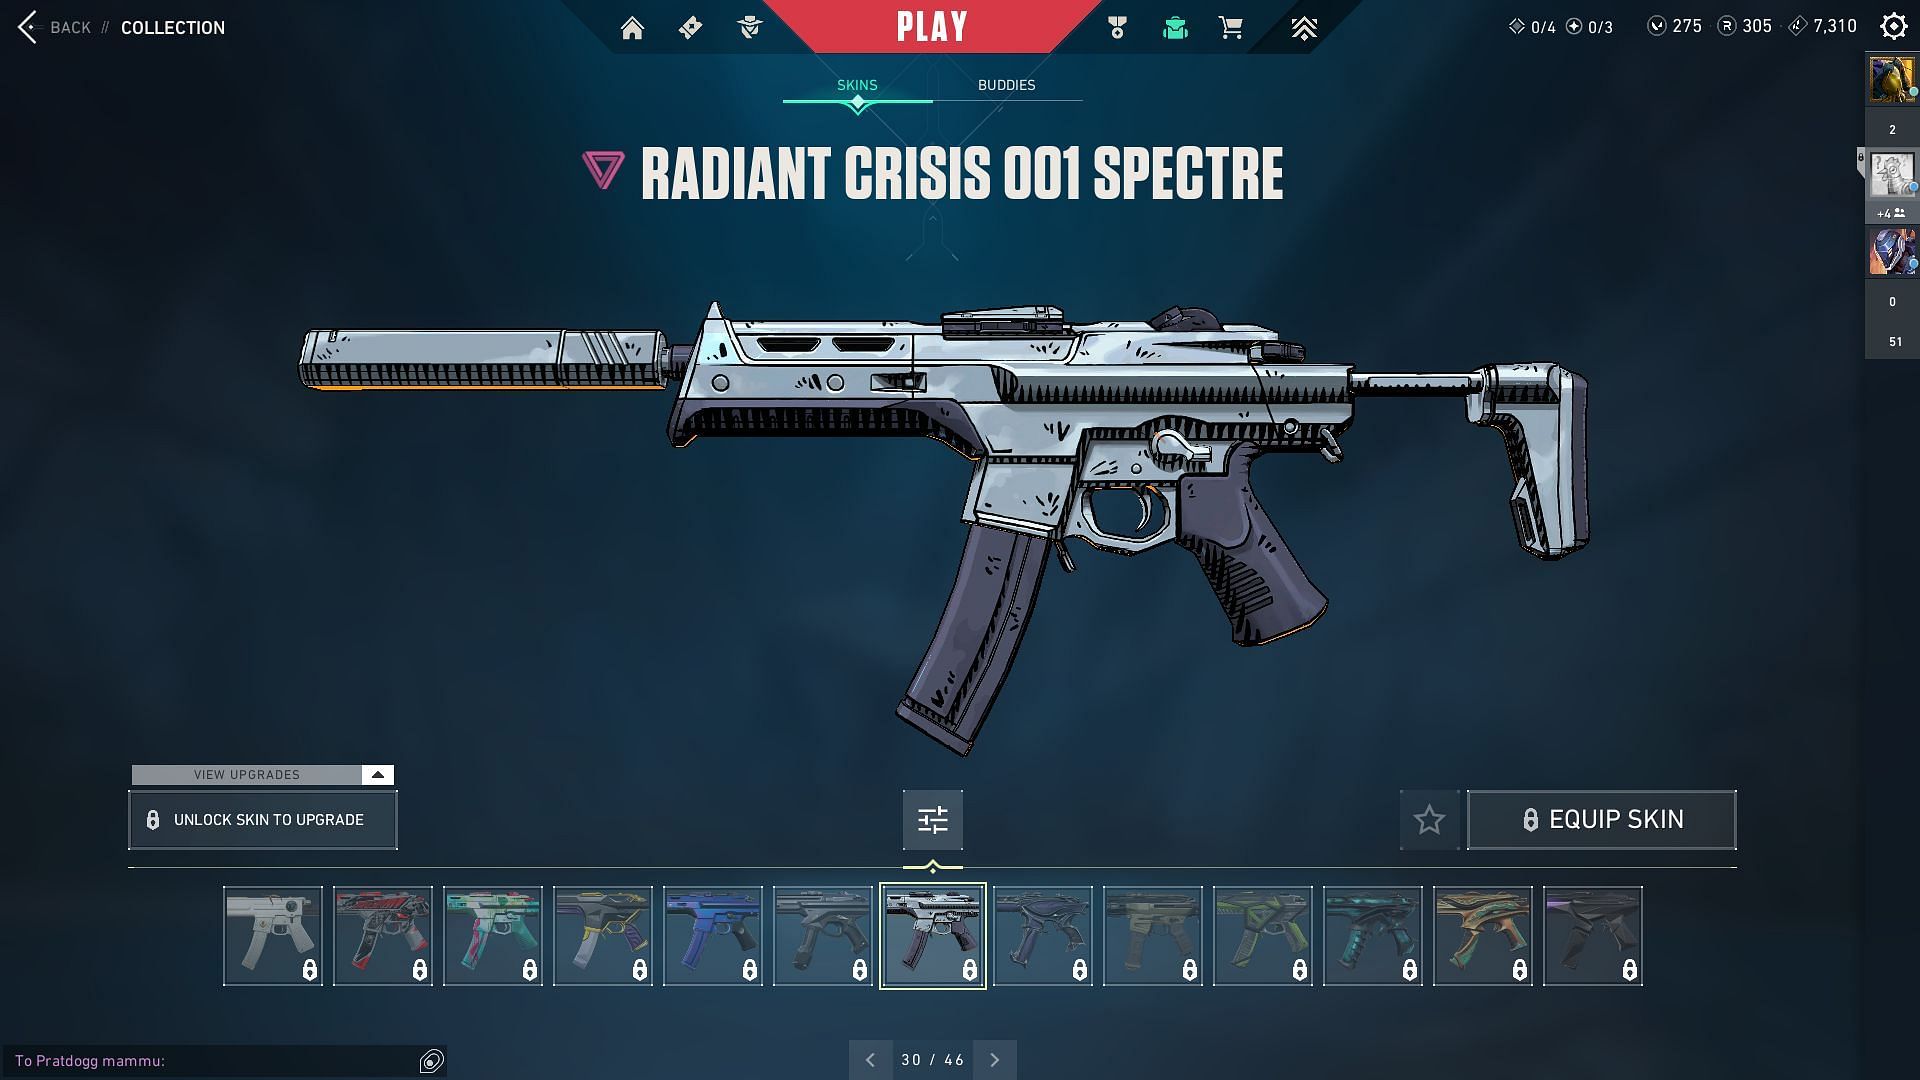 Radiant Crisis 001 Spectre (Image via Sportskeeda and Riot Games)